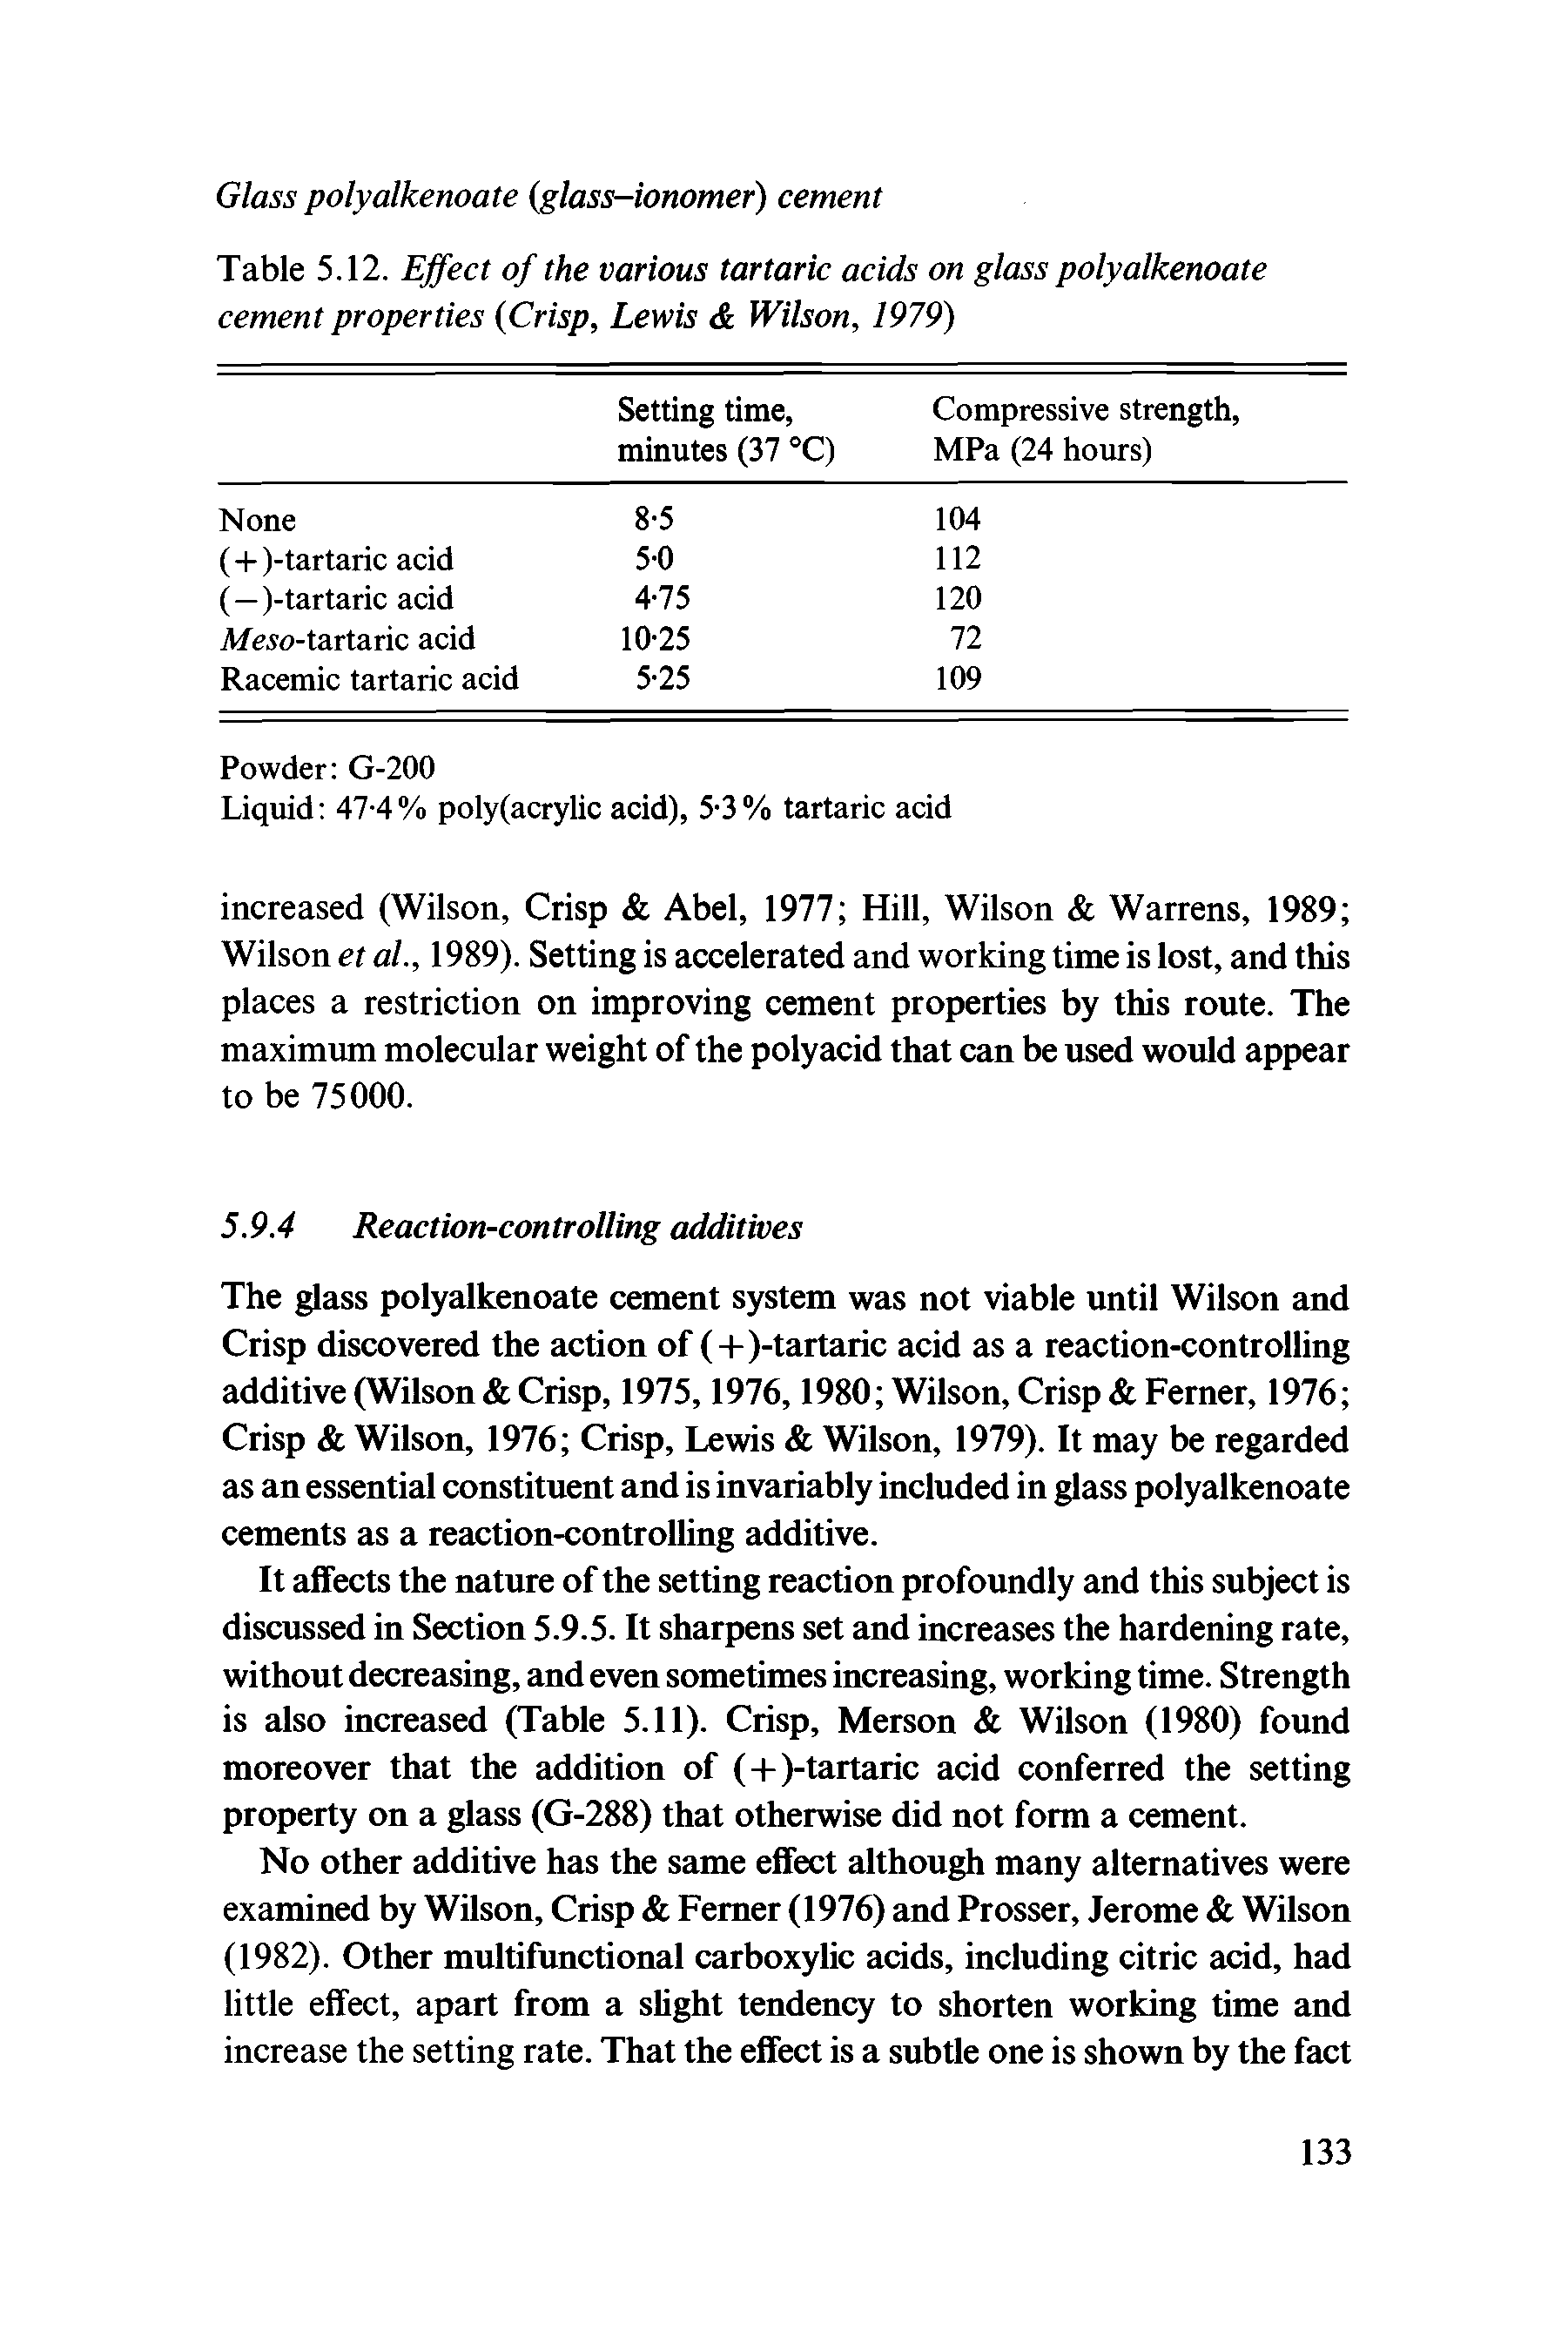 Table 5.12. Ejfect of the various tartaric acids on glass polyalkenoate cement properties Crisp, Lewis Wilson, 1979)...